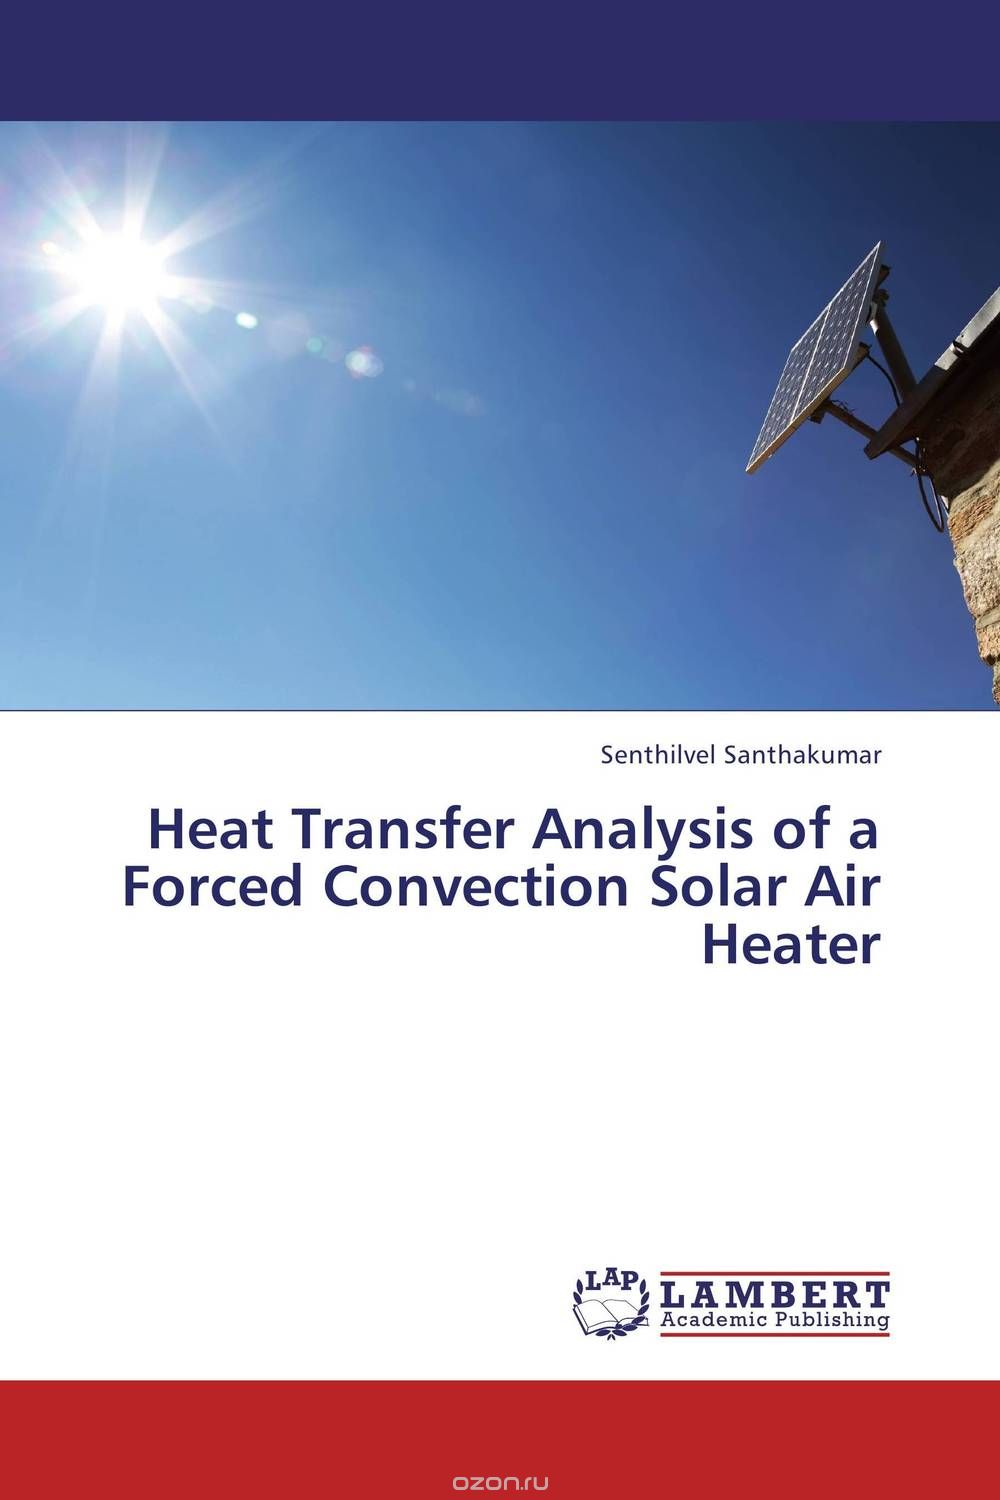 Скачать книгу "Heat Transfer Analysis of a Forced Convection Solar Air Heater"